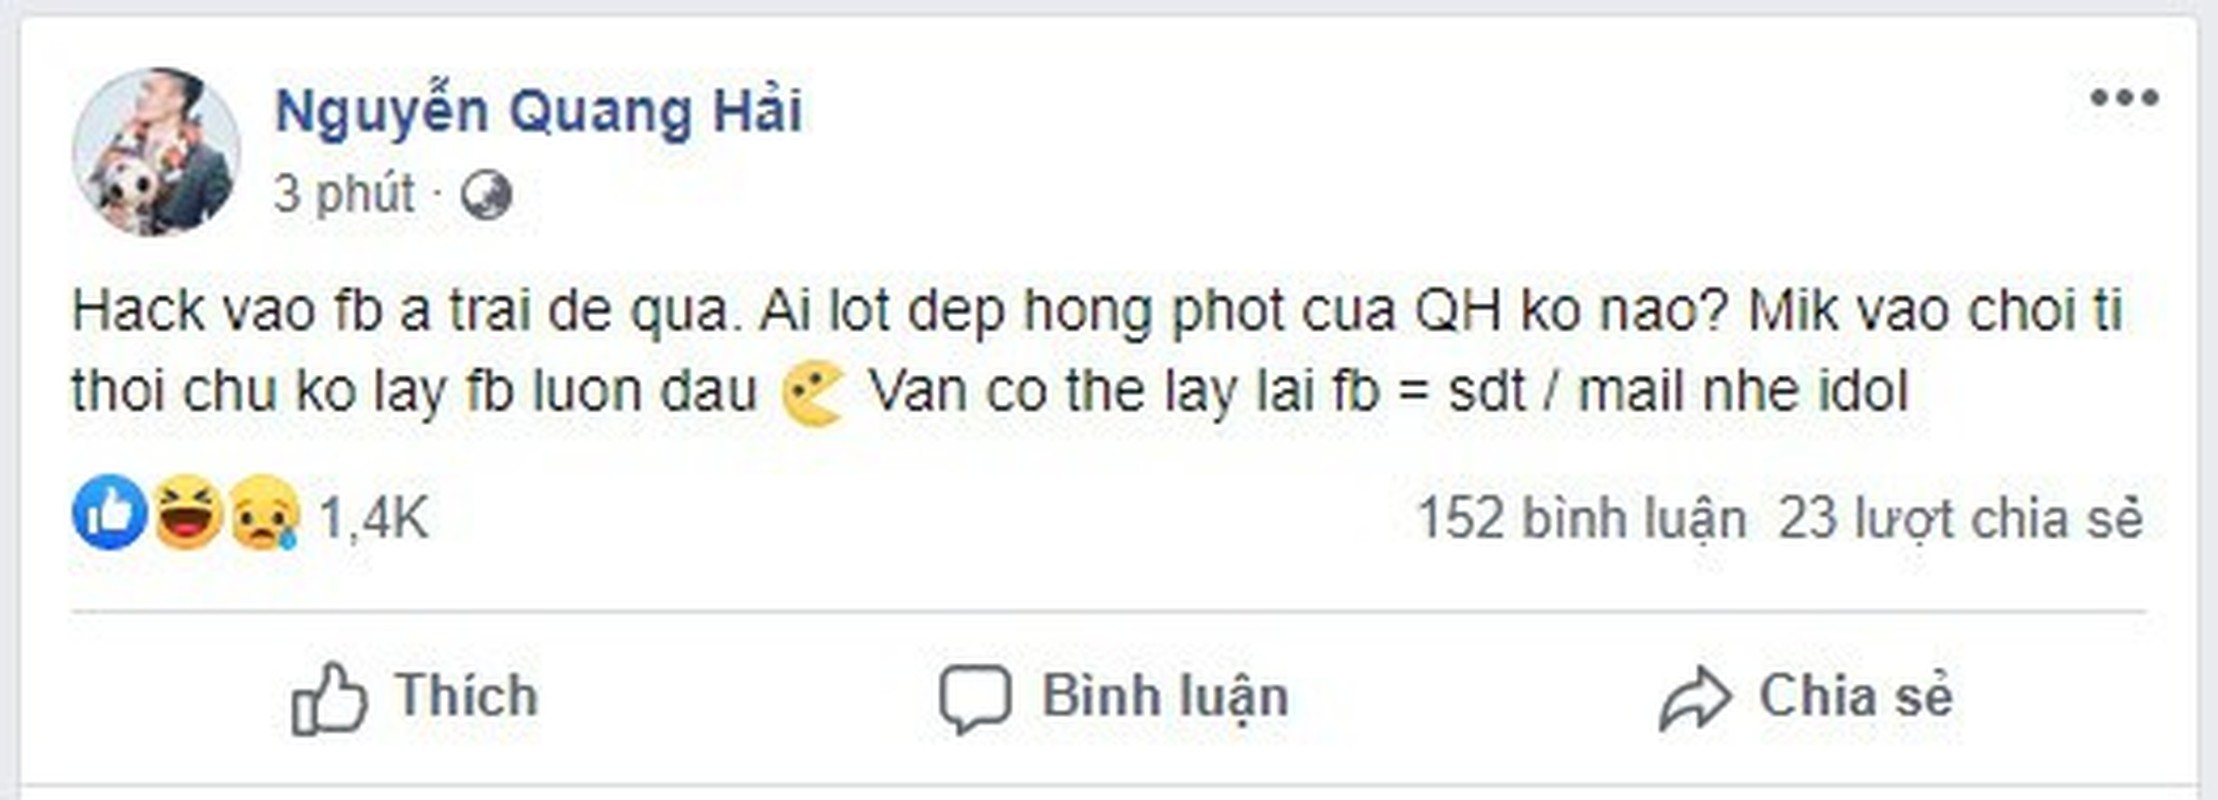 Quang Hai lo tin nhan nhay cam, ban gai co dong thai bat ngo